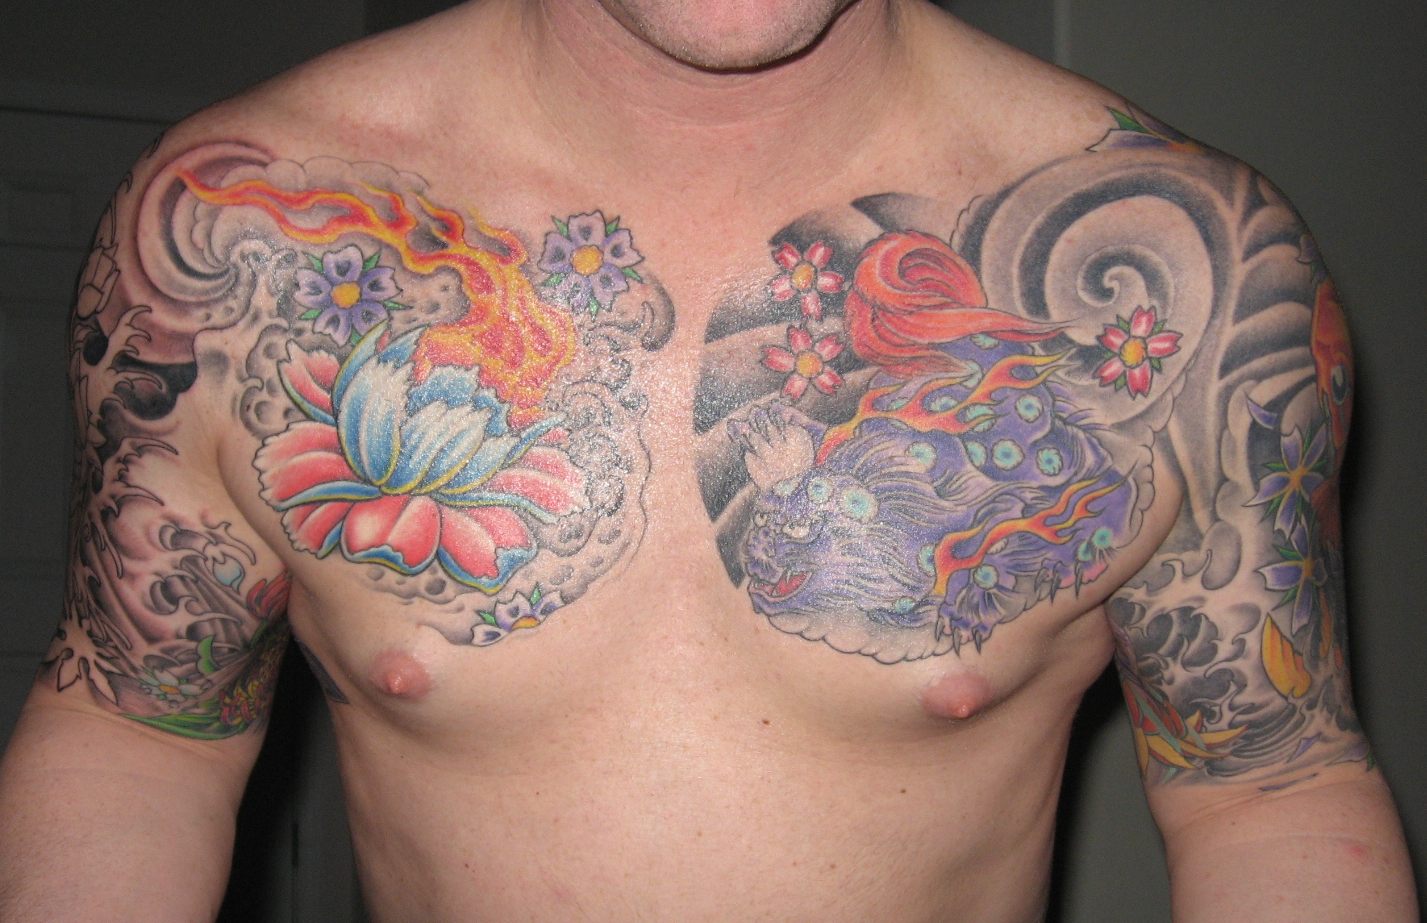 http://4.bp.blogspot.com/_De3HUQ-A6EA/TUQc5xeF8PI/AAAAAAAABTs/MfvbpiRAKlM/s1600/tattoos%20image.jpg%20(44).jpg